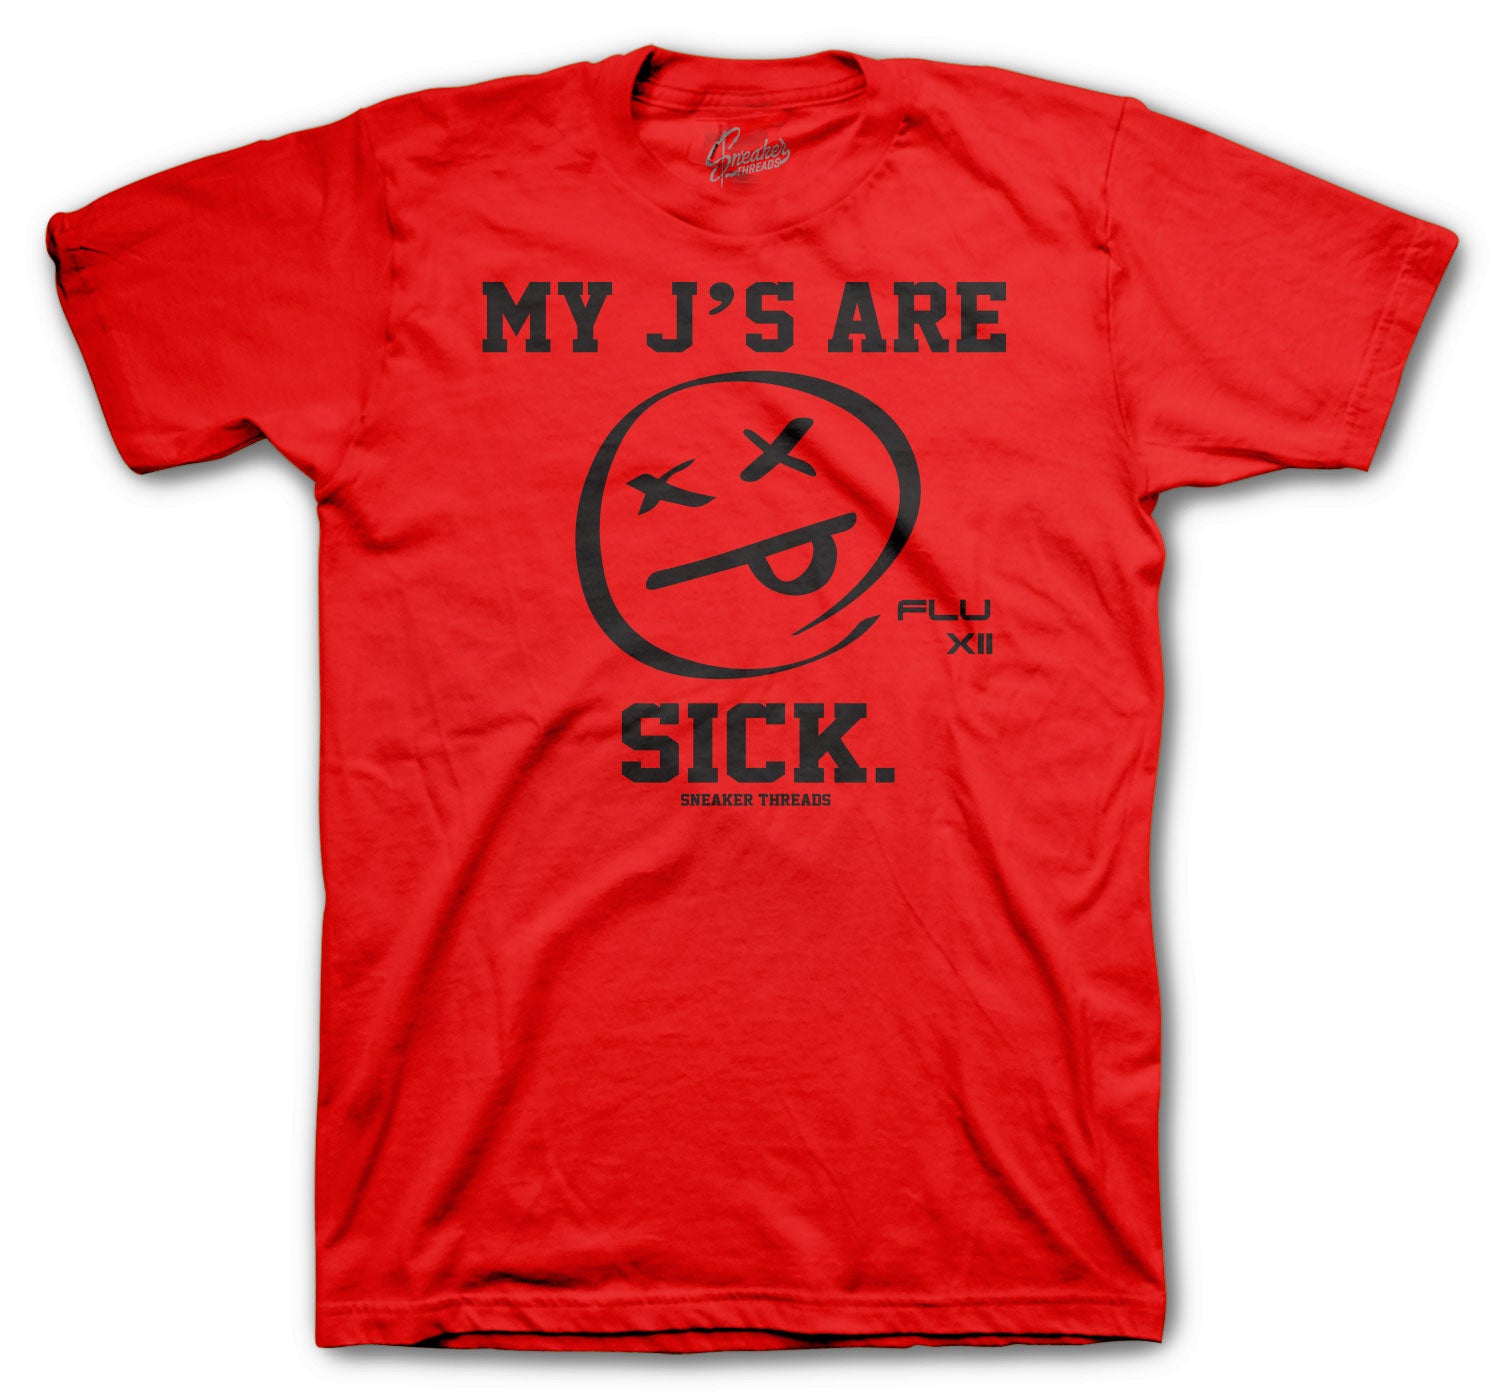 Retro 12 Reverse Flu Shirt - My J's - Red